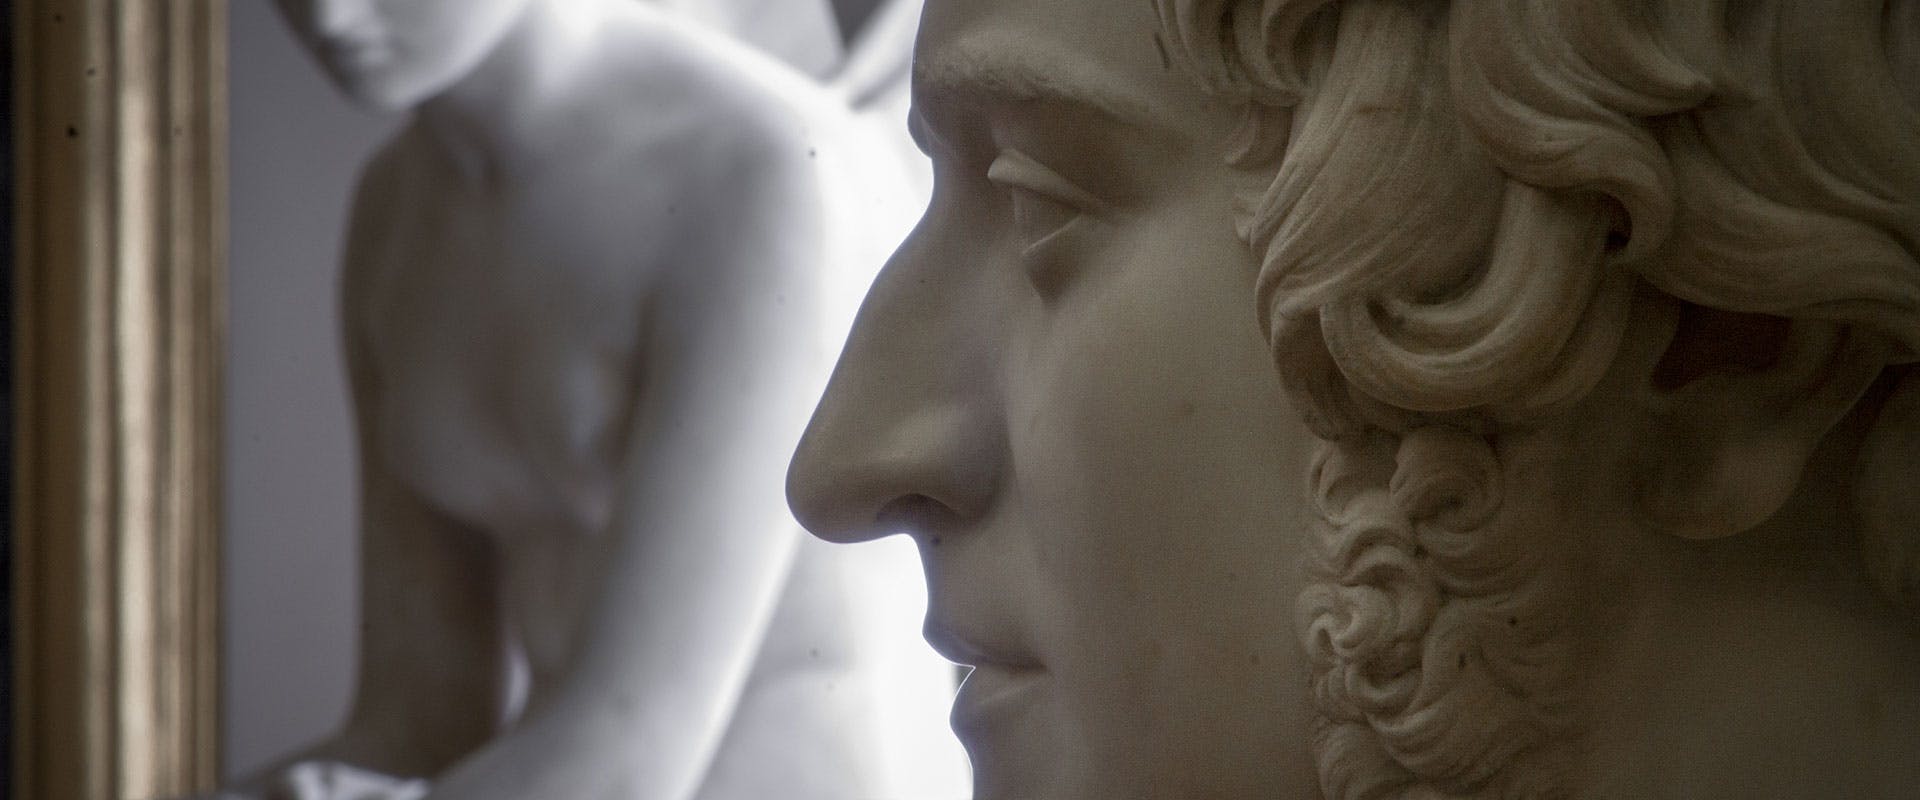 Il busto di Francesco Forti torna in Galleria d'Arte Moderna